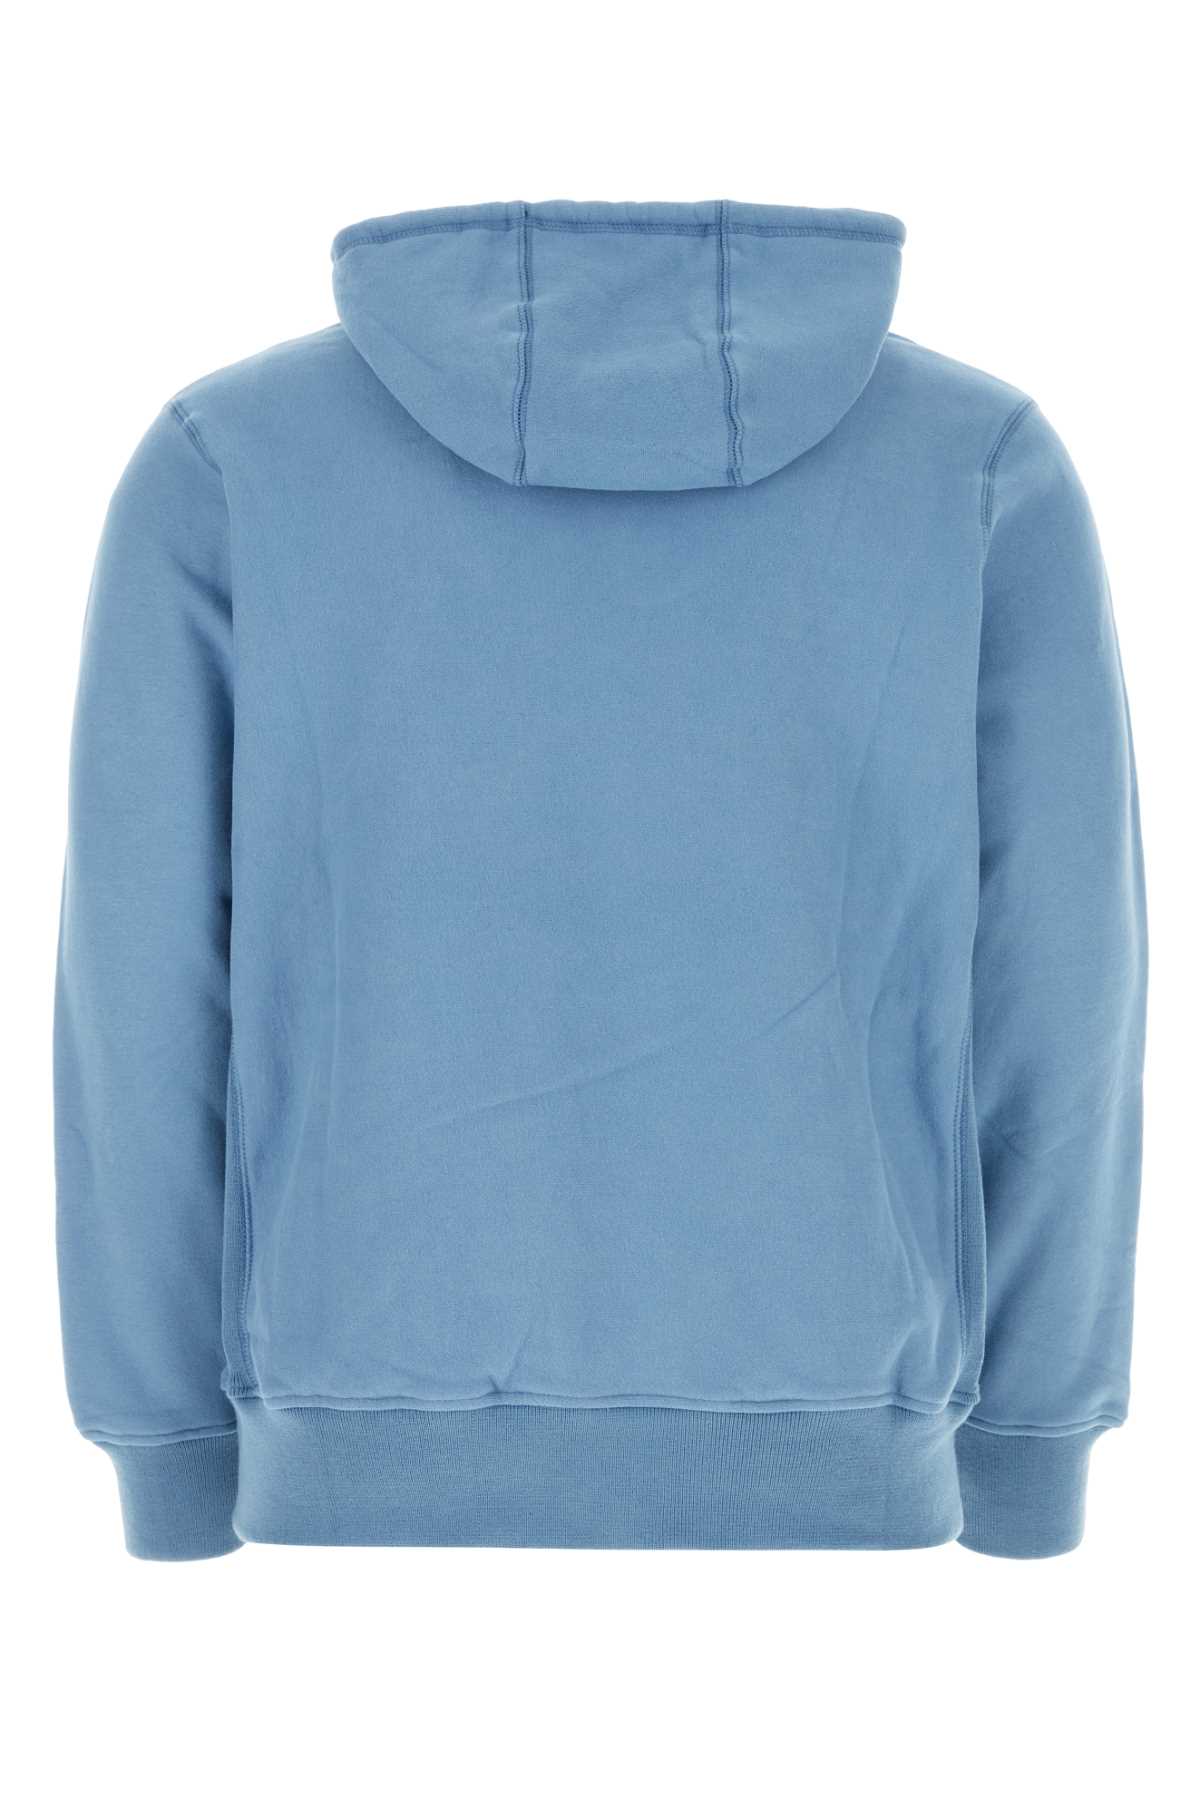 Billionaire Boys Club Cerulean Blue Cotton Sweatshirt